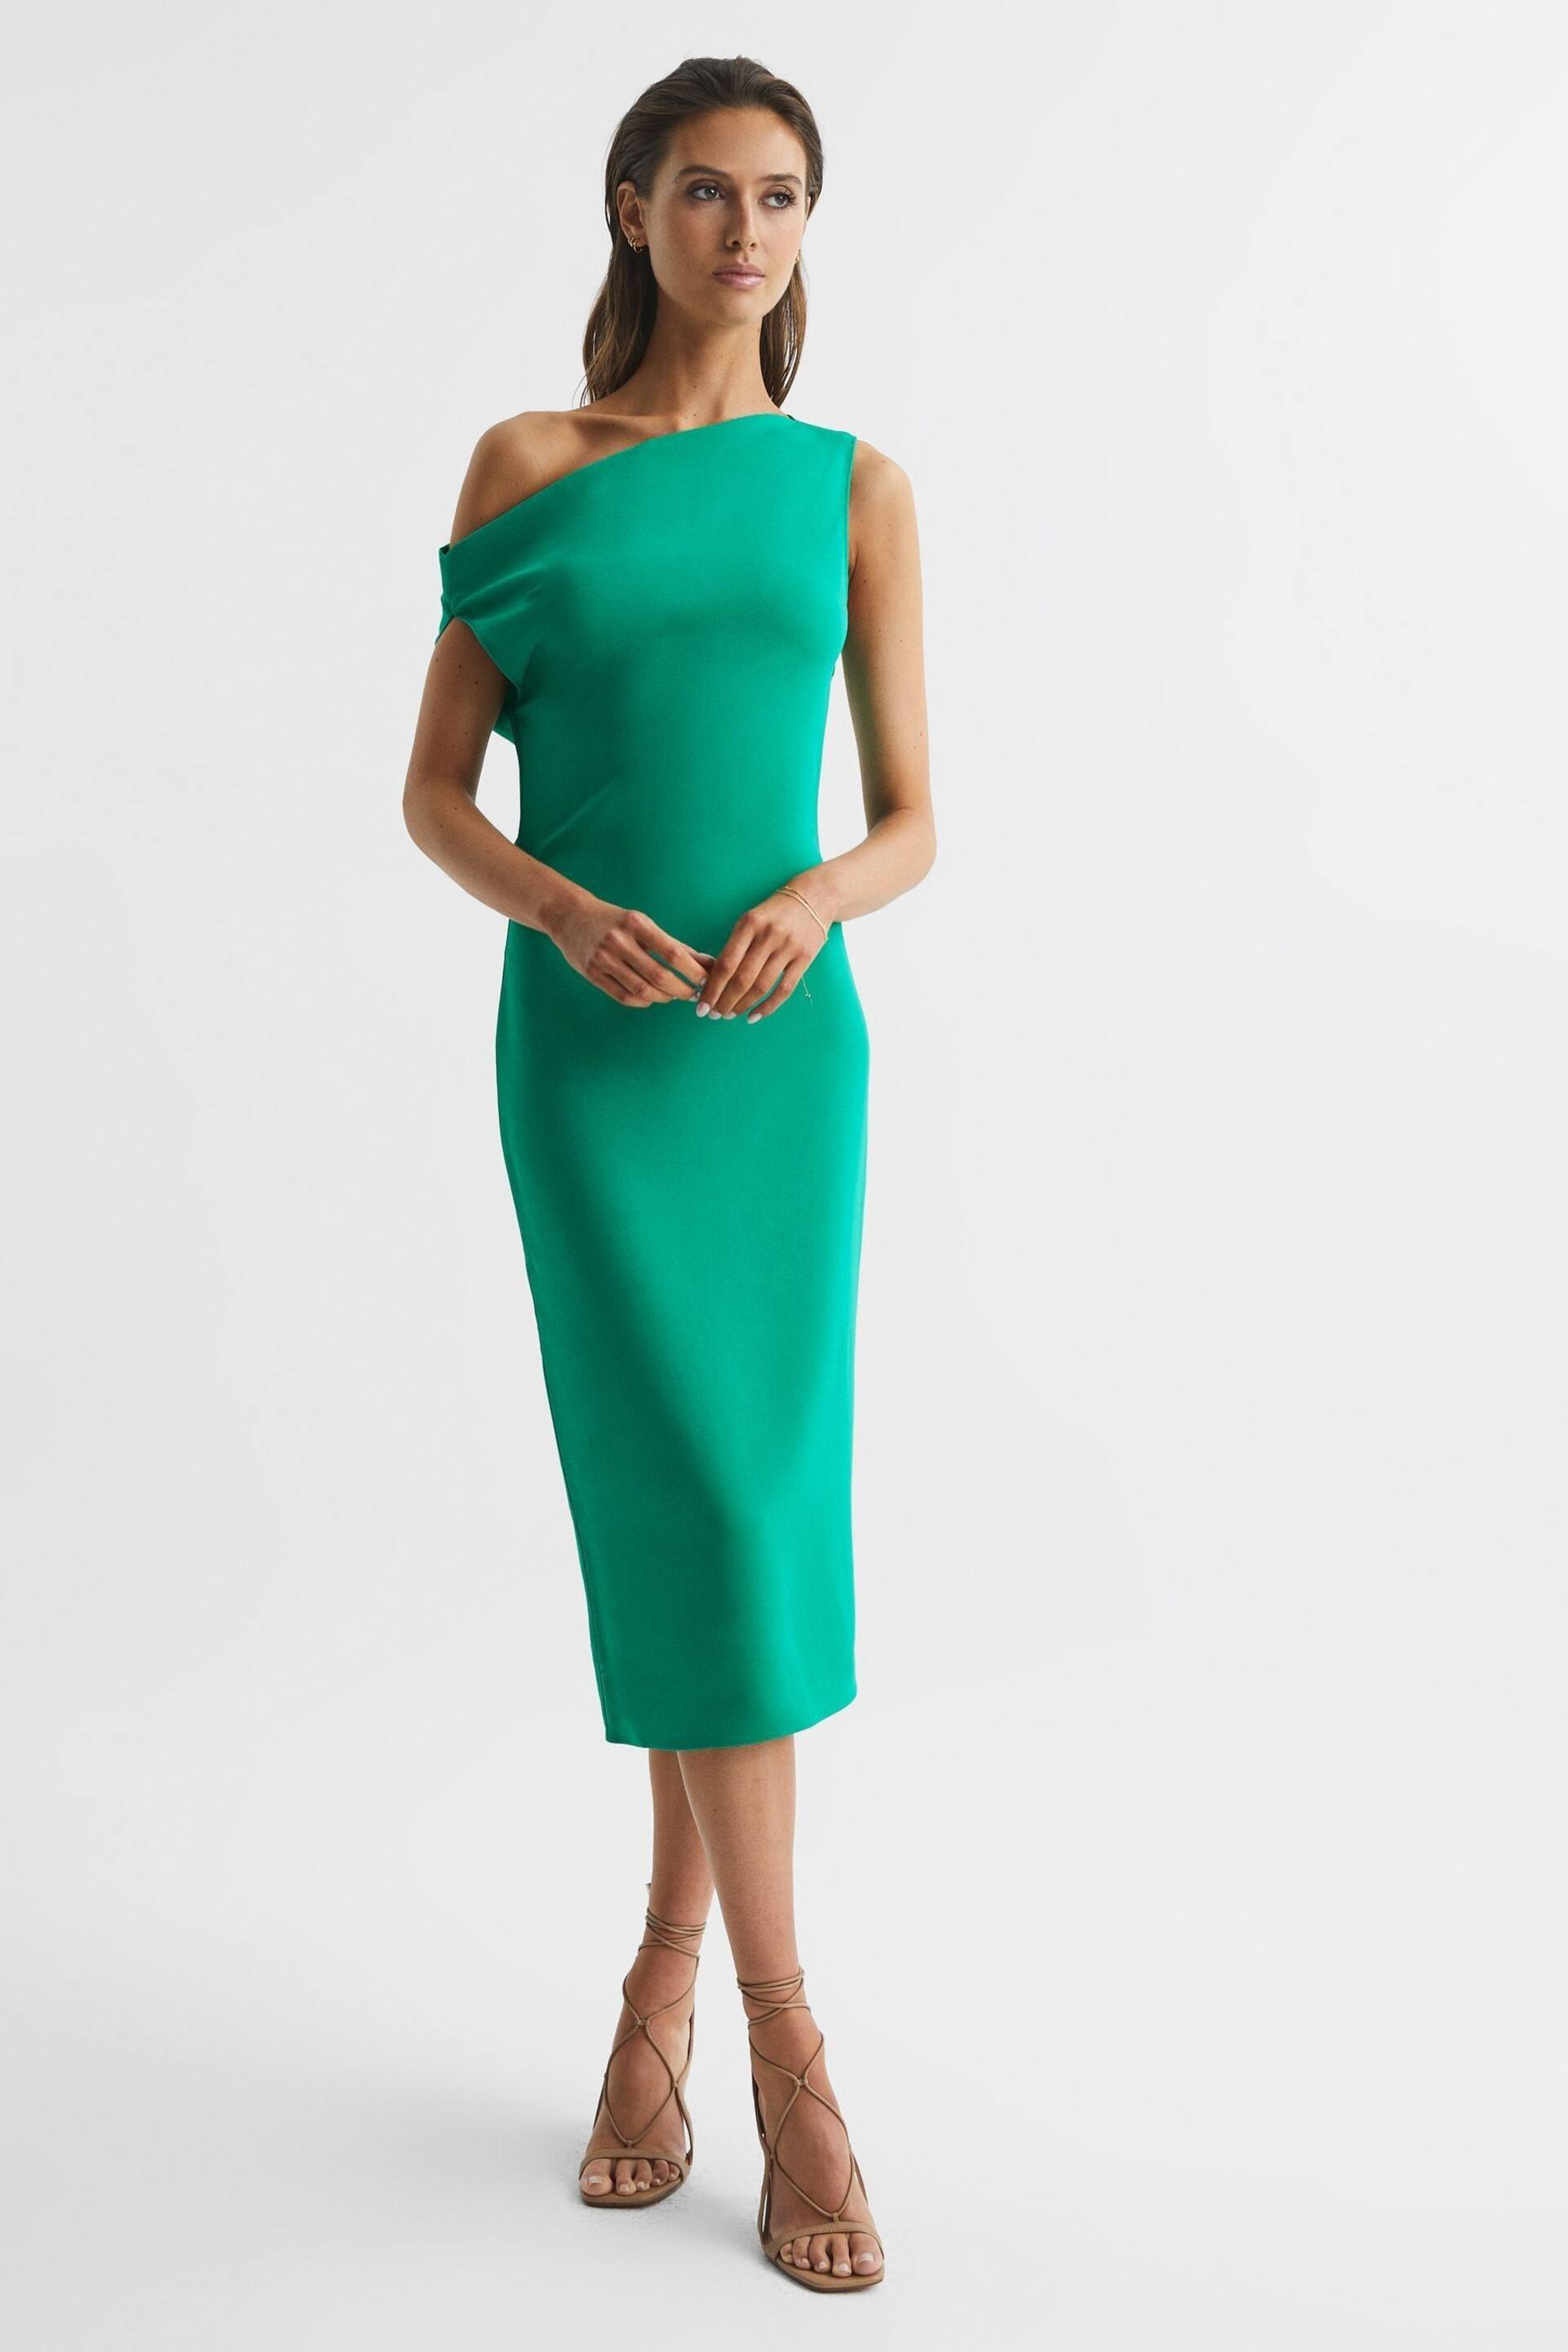 Reiss Green Zaria Off-Shoulder Bodycon Midi Dress - Image 1 of 6